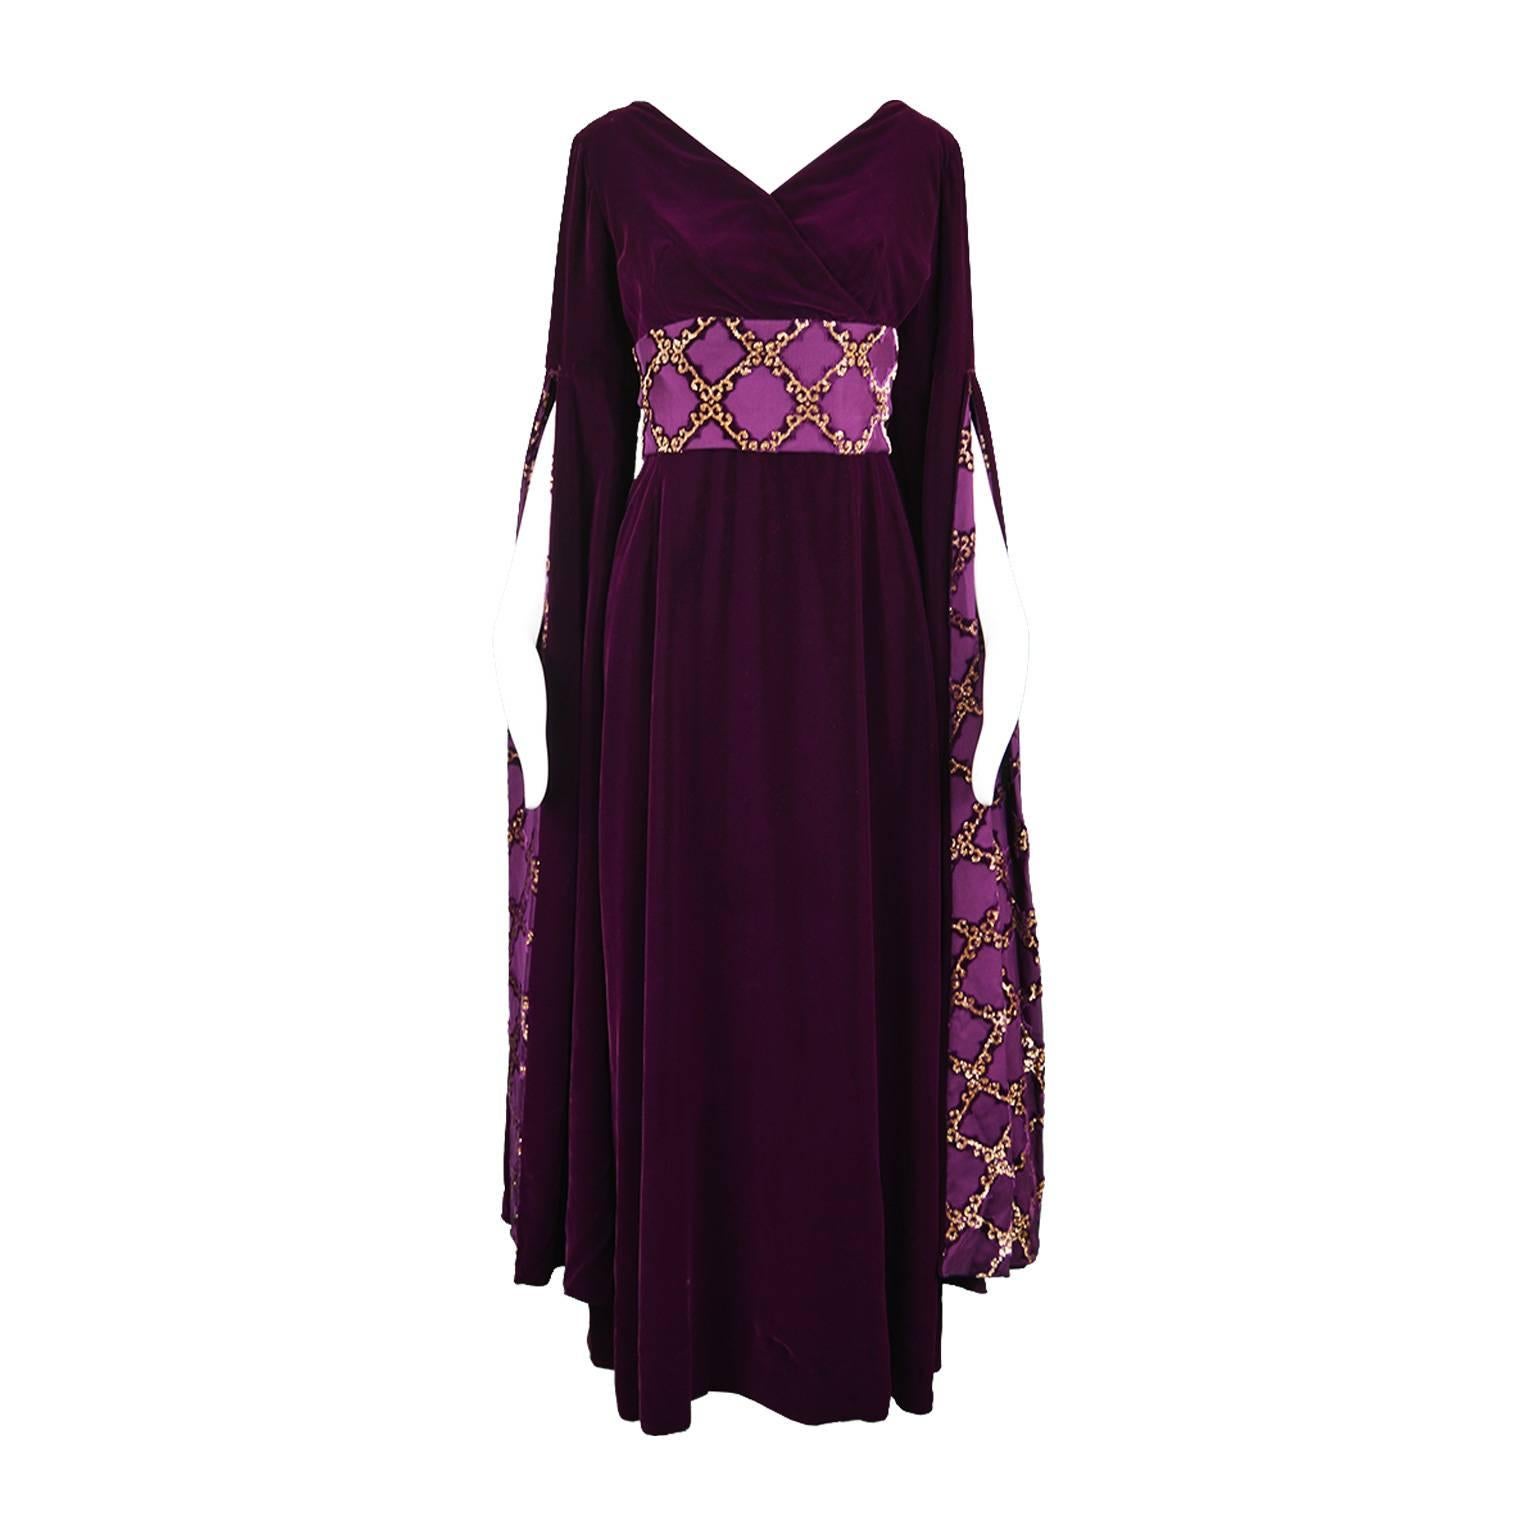 Troubadour Renaissance Inspired Velvet & Brocade Evening Gown, c. 1970